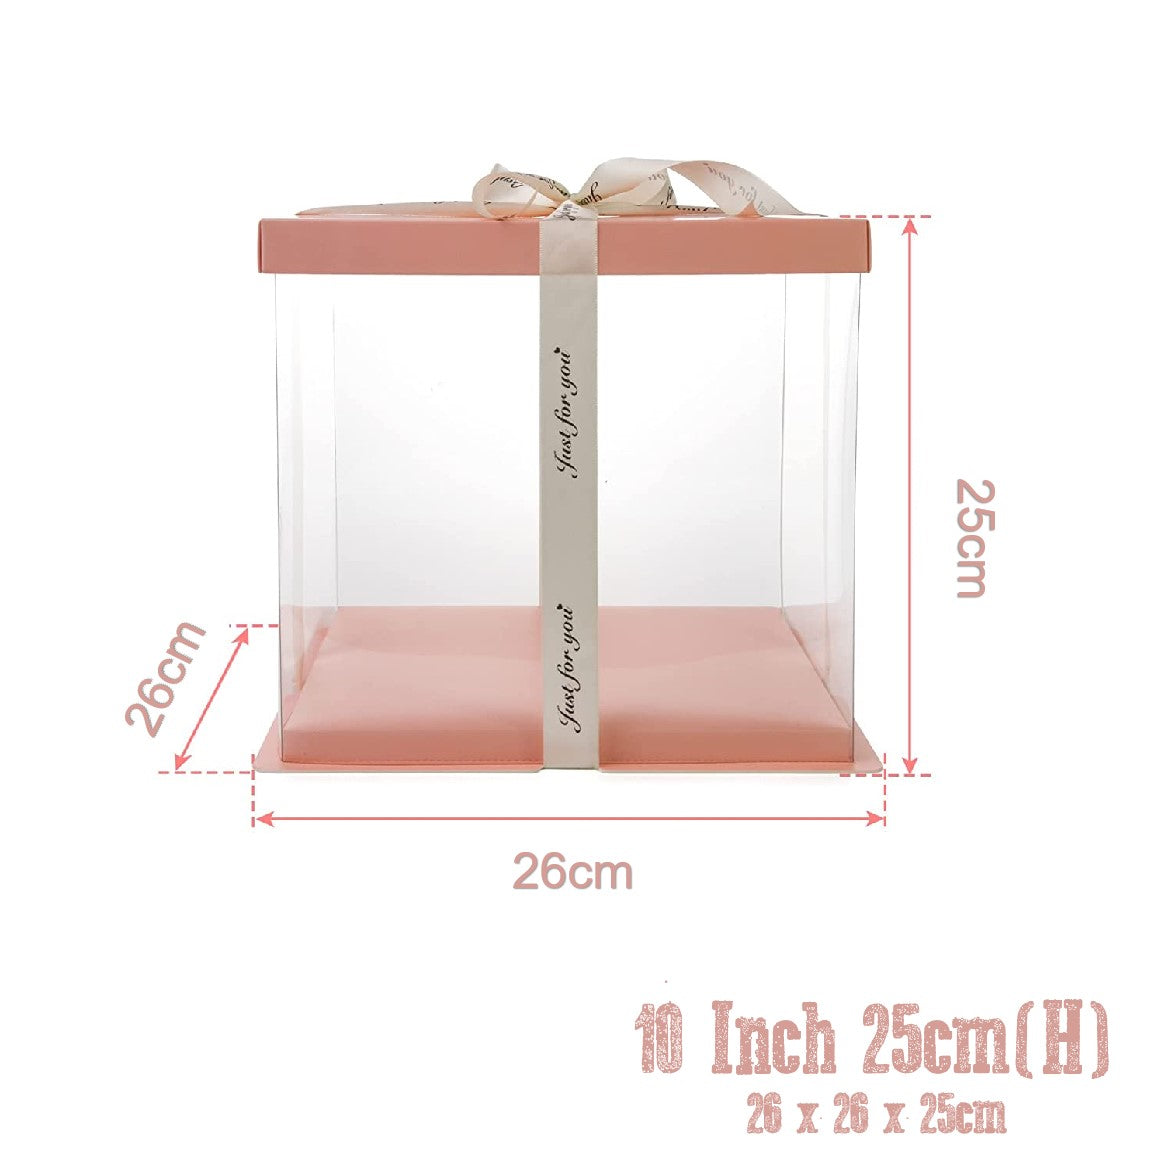 10Inch Cake Box Packaging 25cm Height - - Rampant Coffee Company